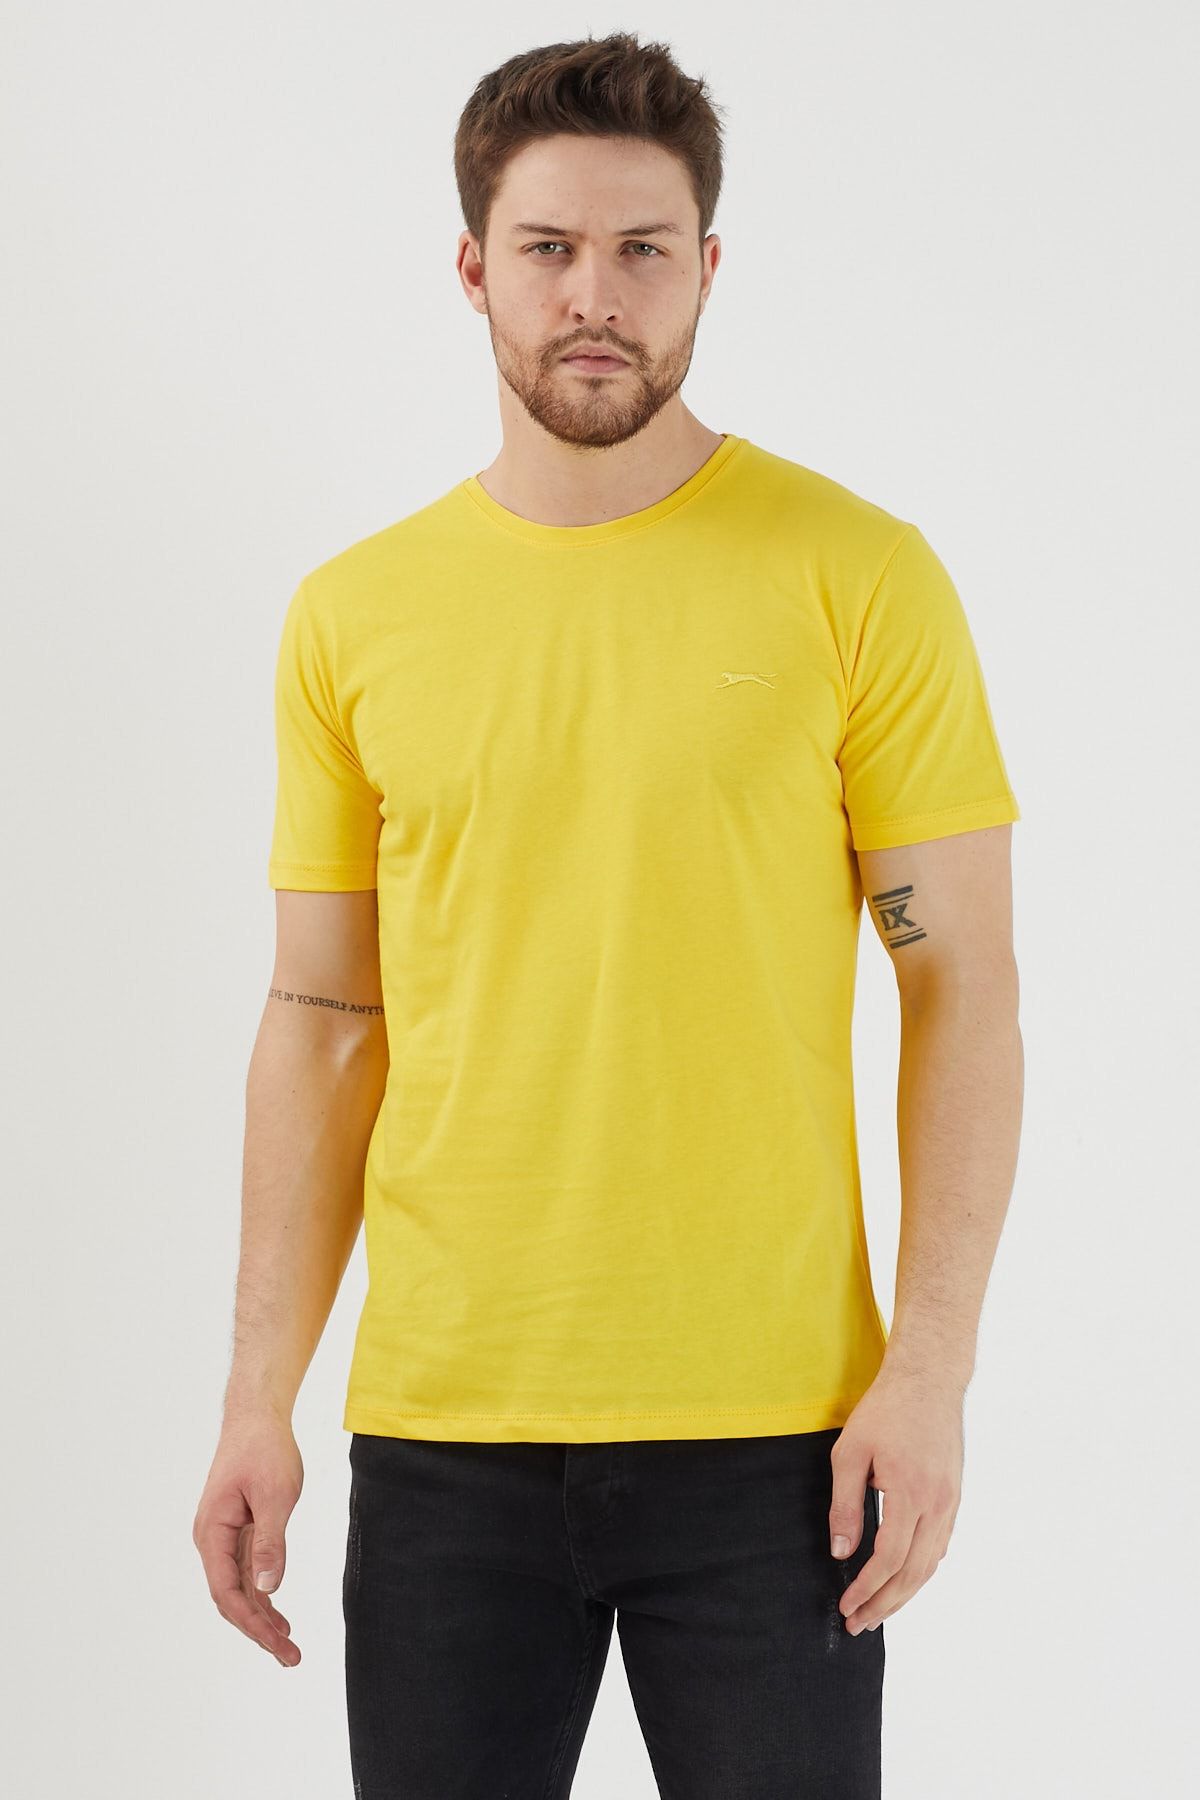 Slazenger Sander Erkek T-shirt Sarı St11te083